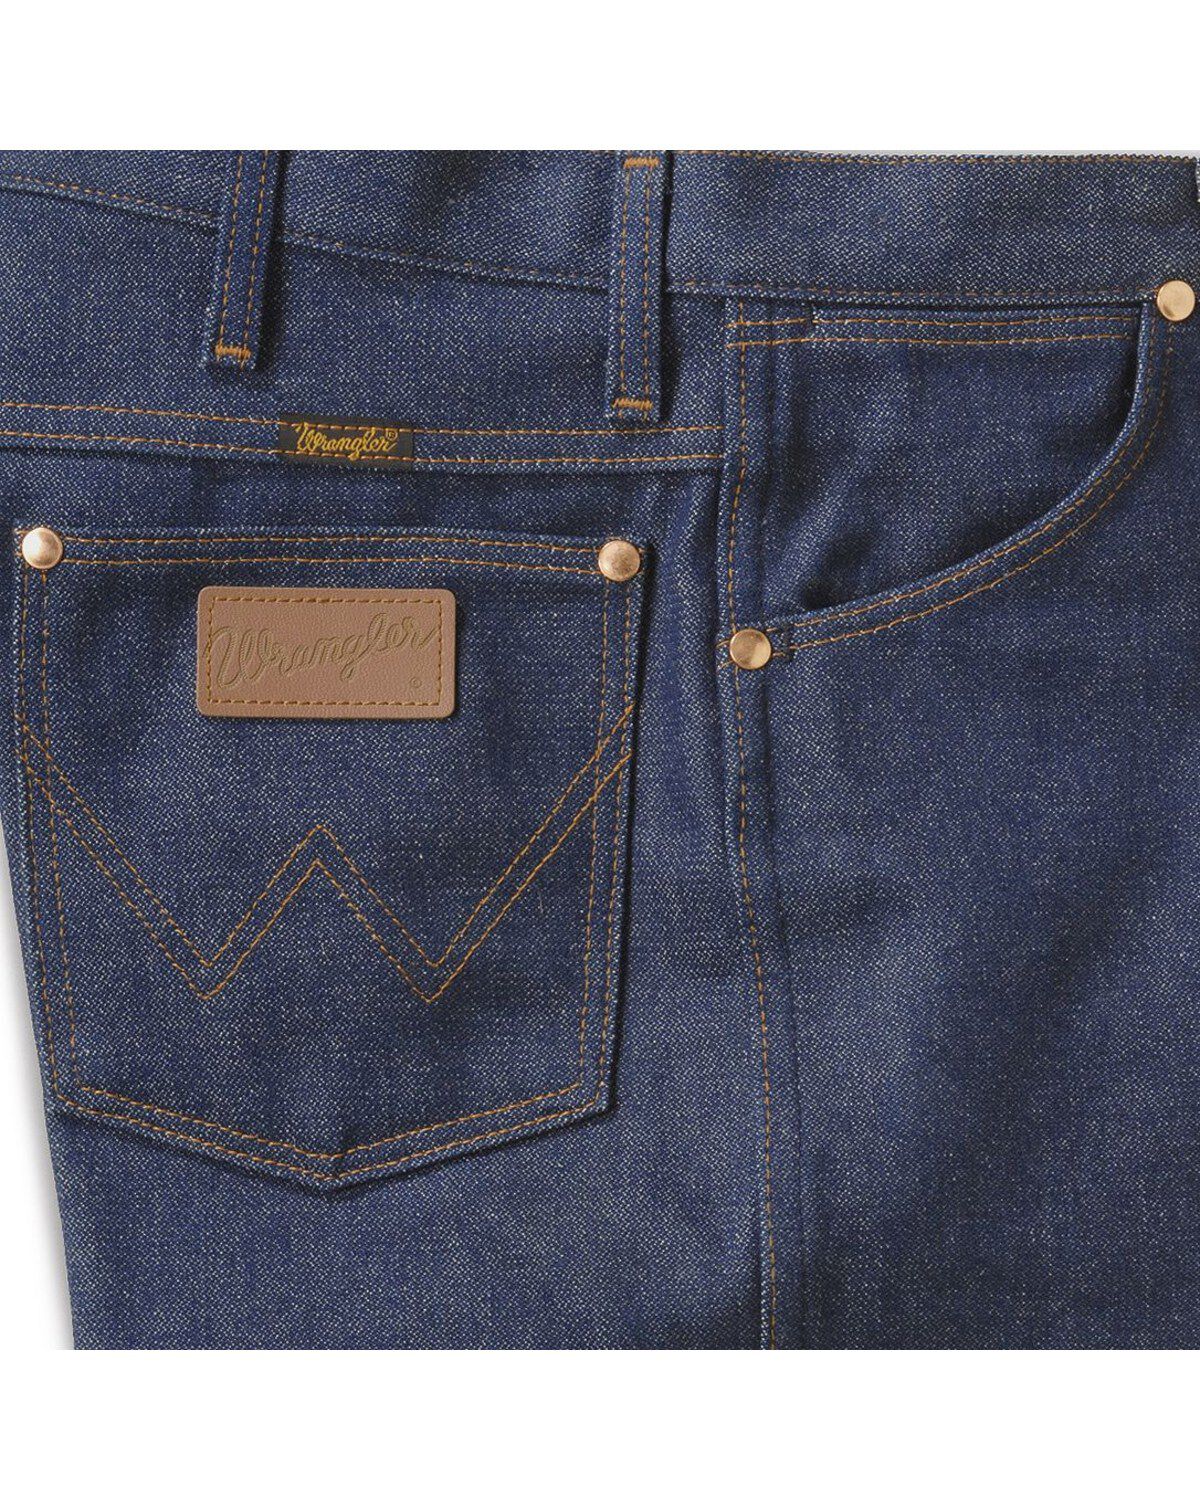 Wrangler Men's Original Fit Rigid Jeans 